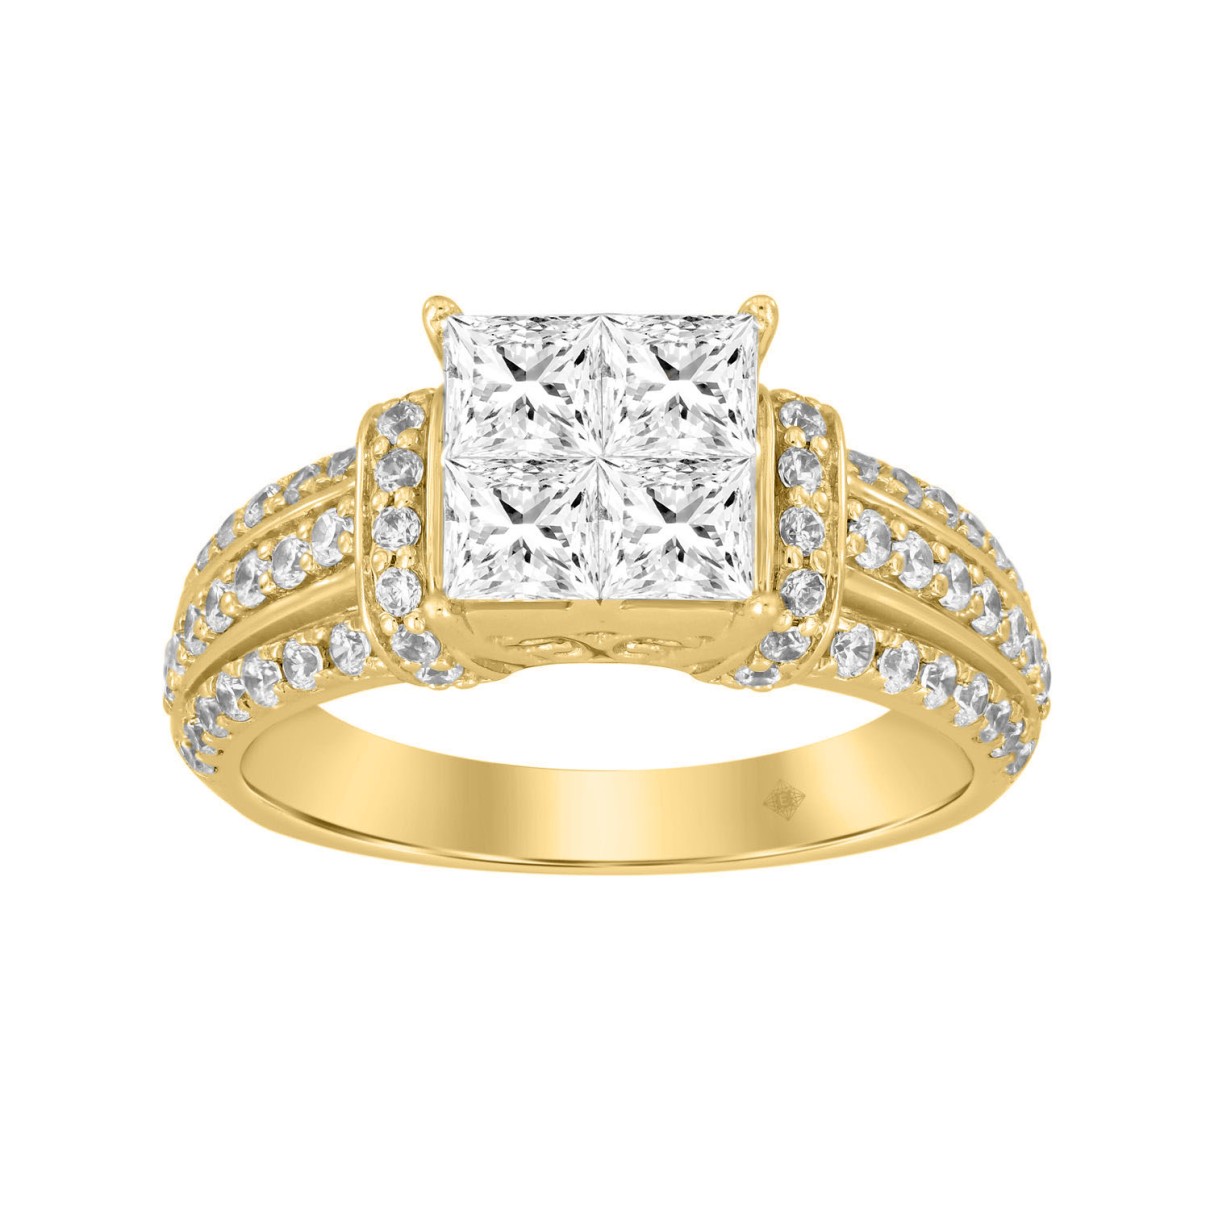 14K YELLOW GOLD 1 1/2CT ROUND/PRINCESS DIAMOND LADIES RING